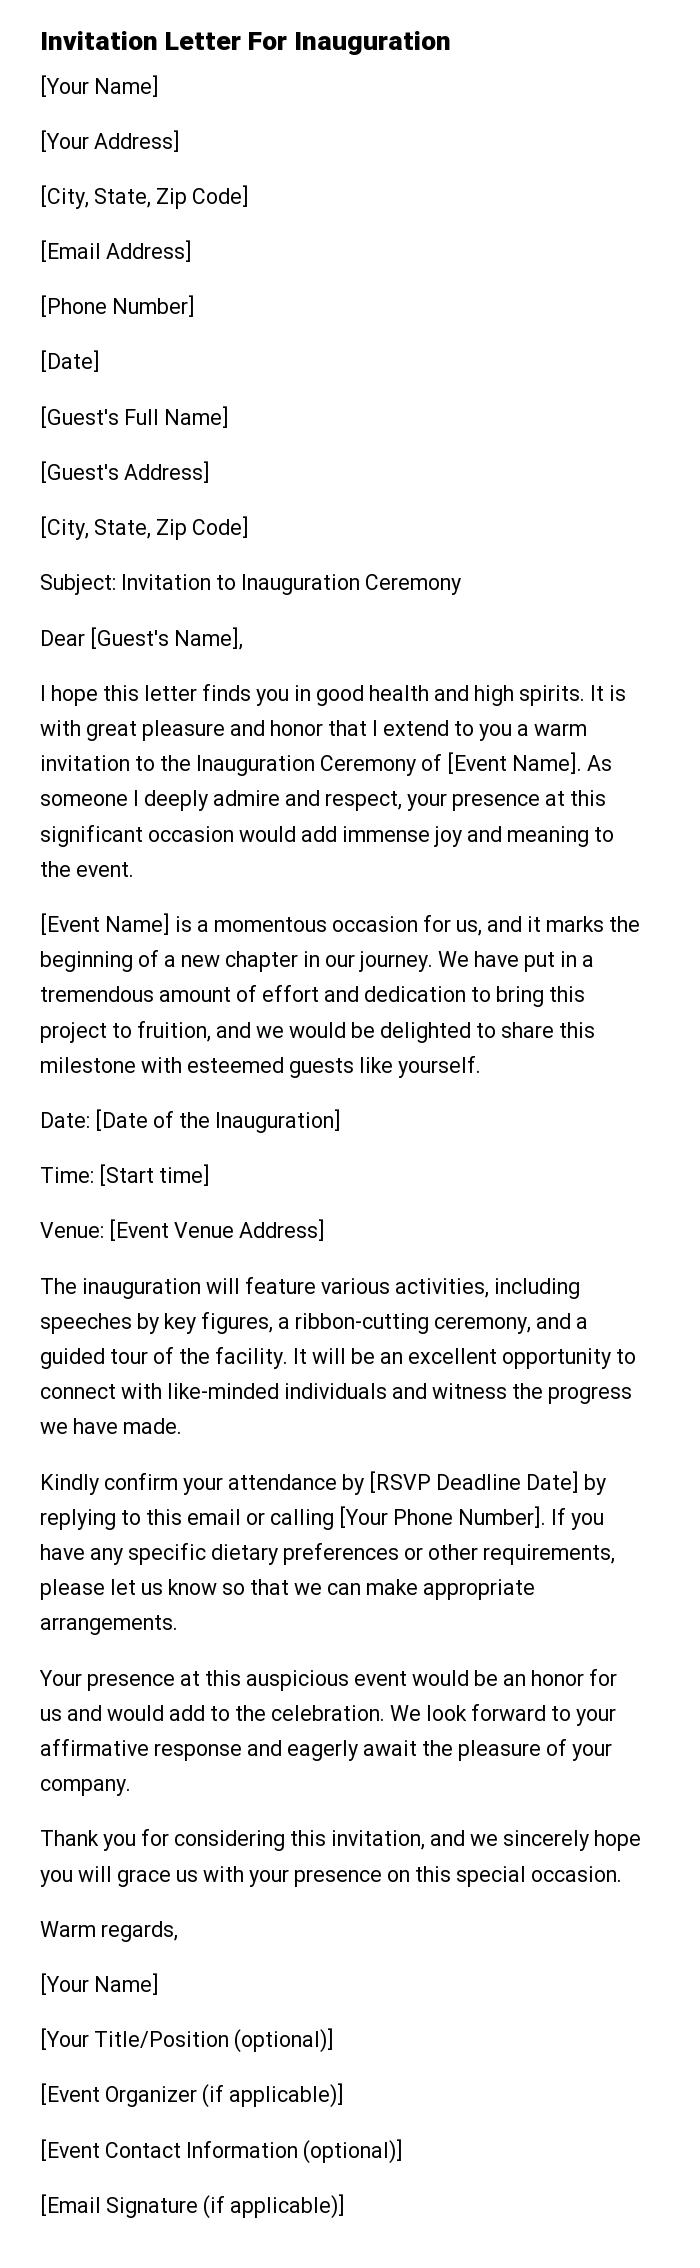 Invitation Letter For Inauguration